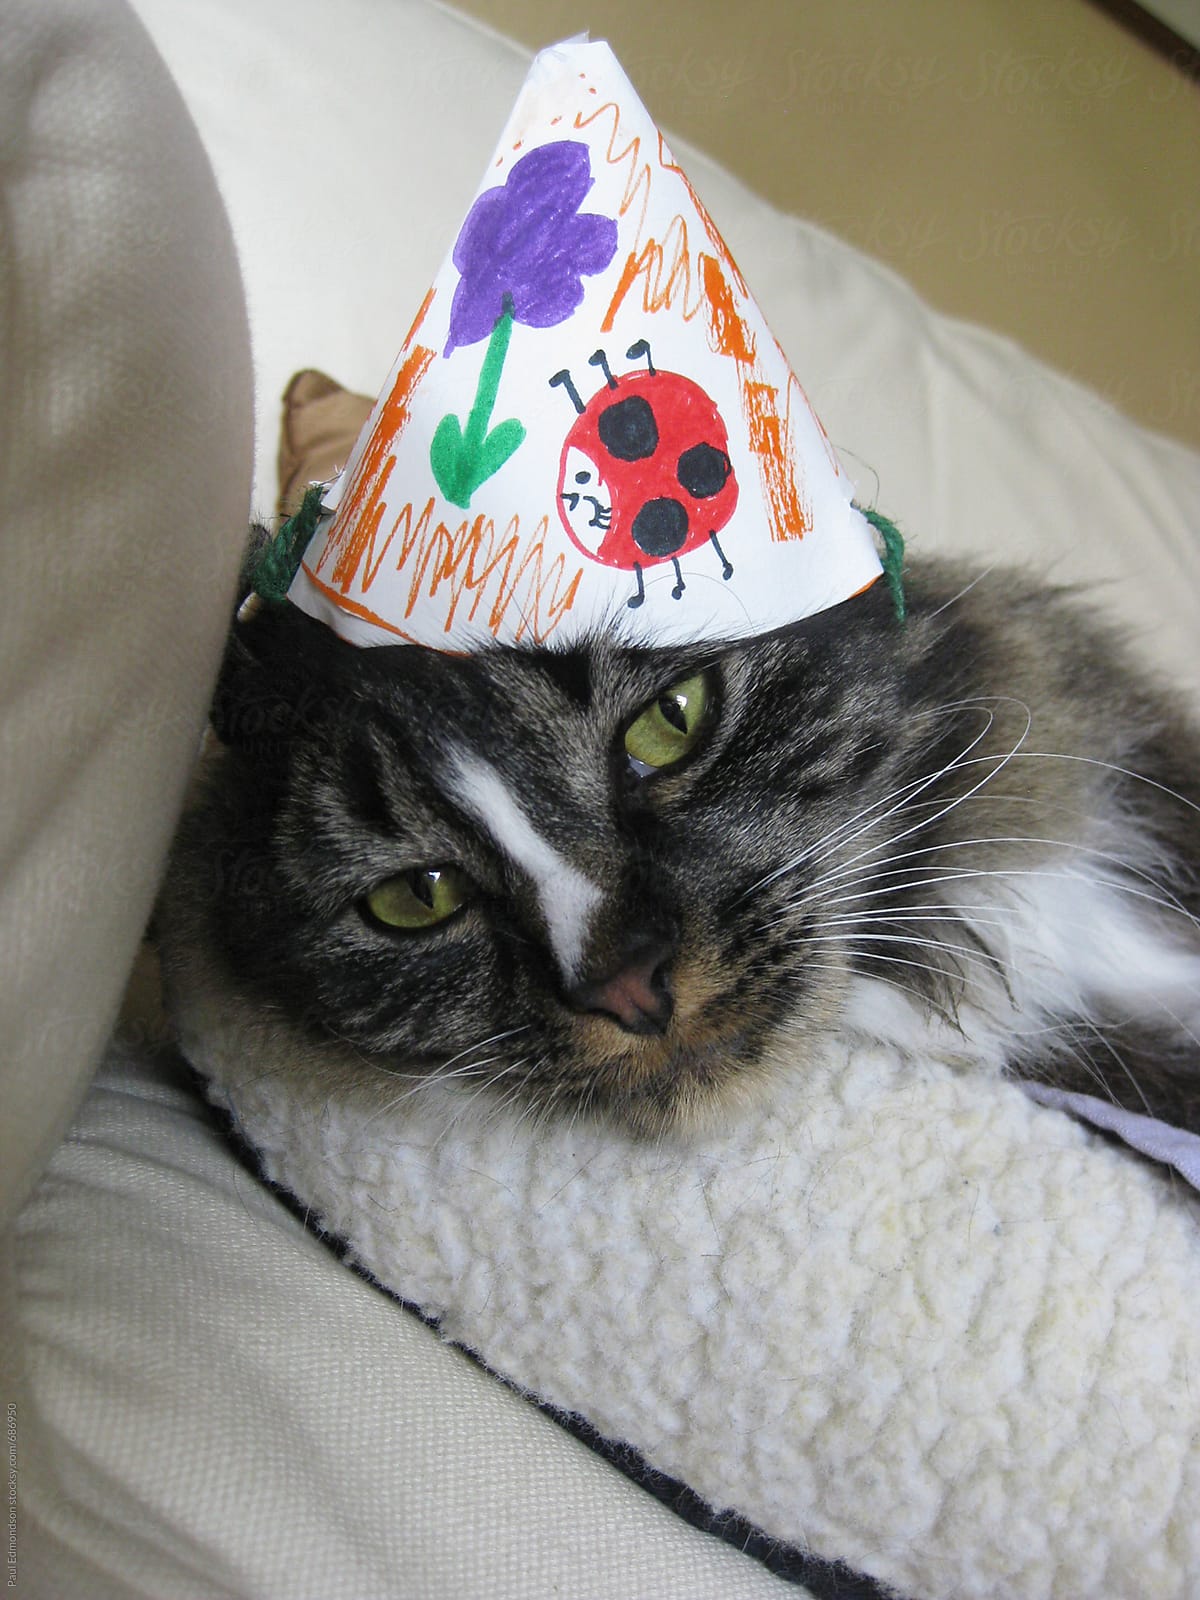 Adorable kitten wearing birthday hat